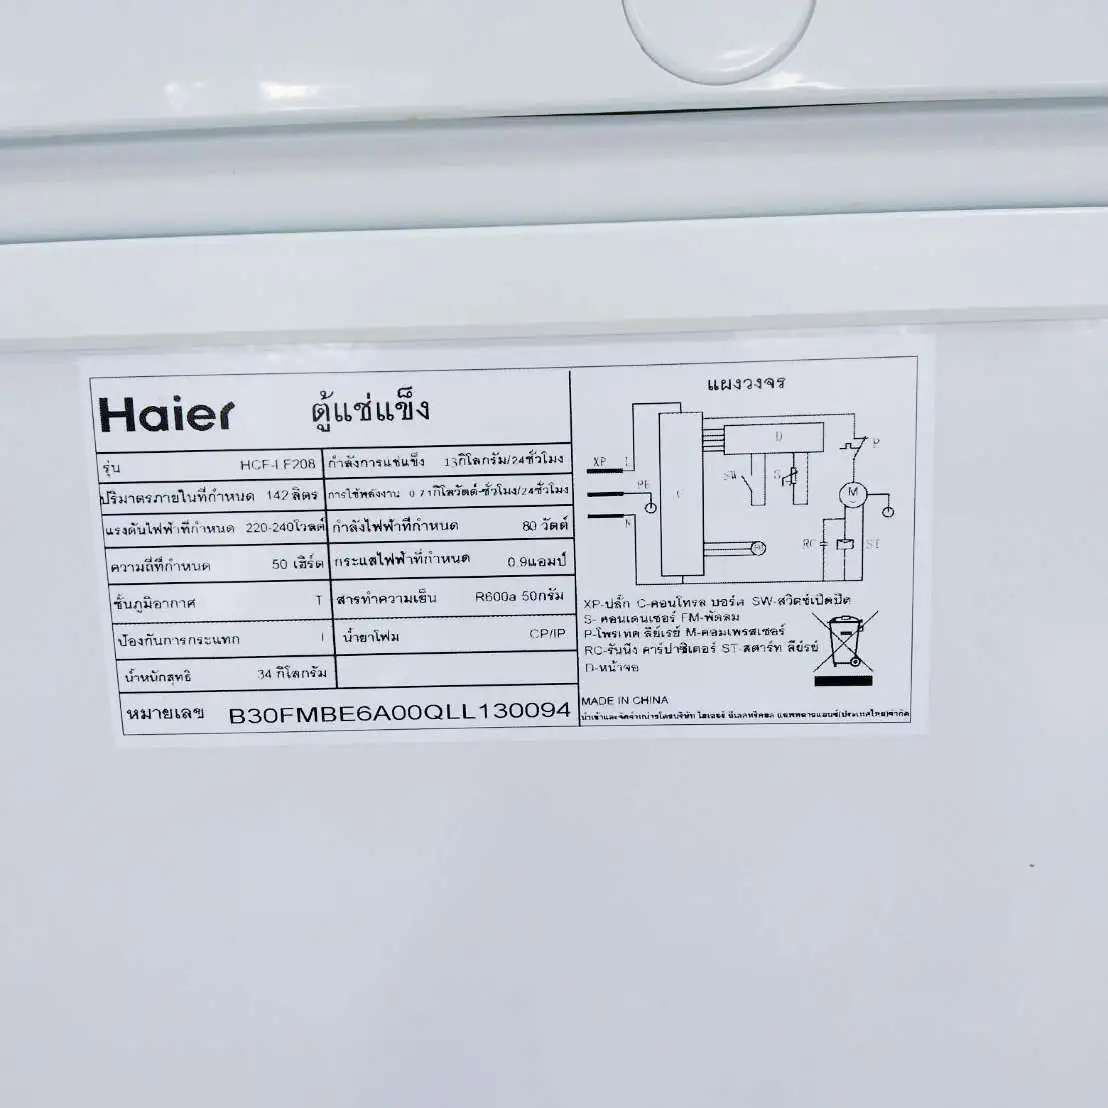 Haier ตู้แช่น้ำนมคุณแม่  ตู้แช่ 2 ระบบ แช่เย็น-แช่แข็ง ขนาดความจุ 142 ลิตร 5.0 Q รุ่น HCF-LF208